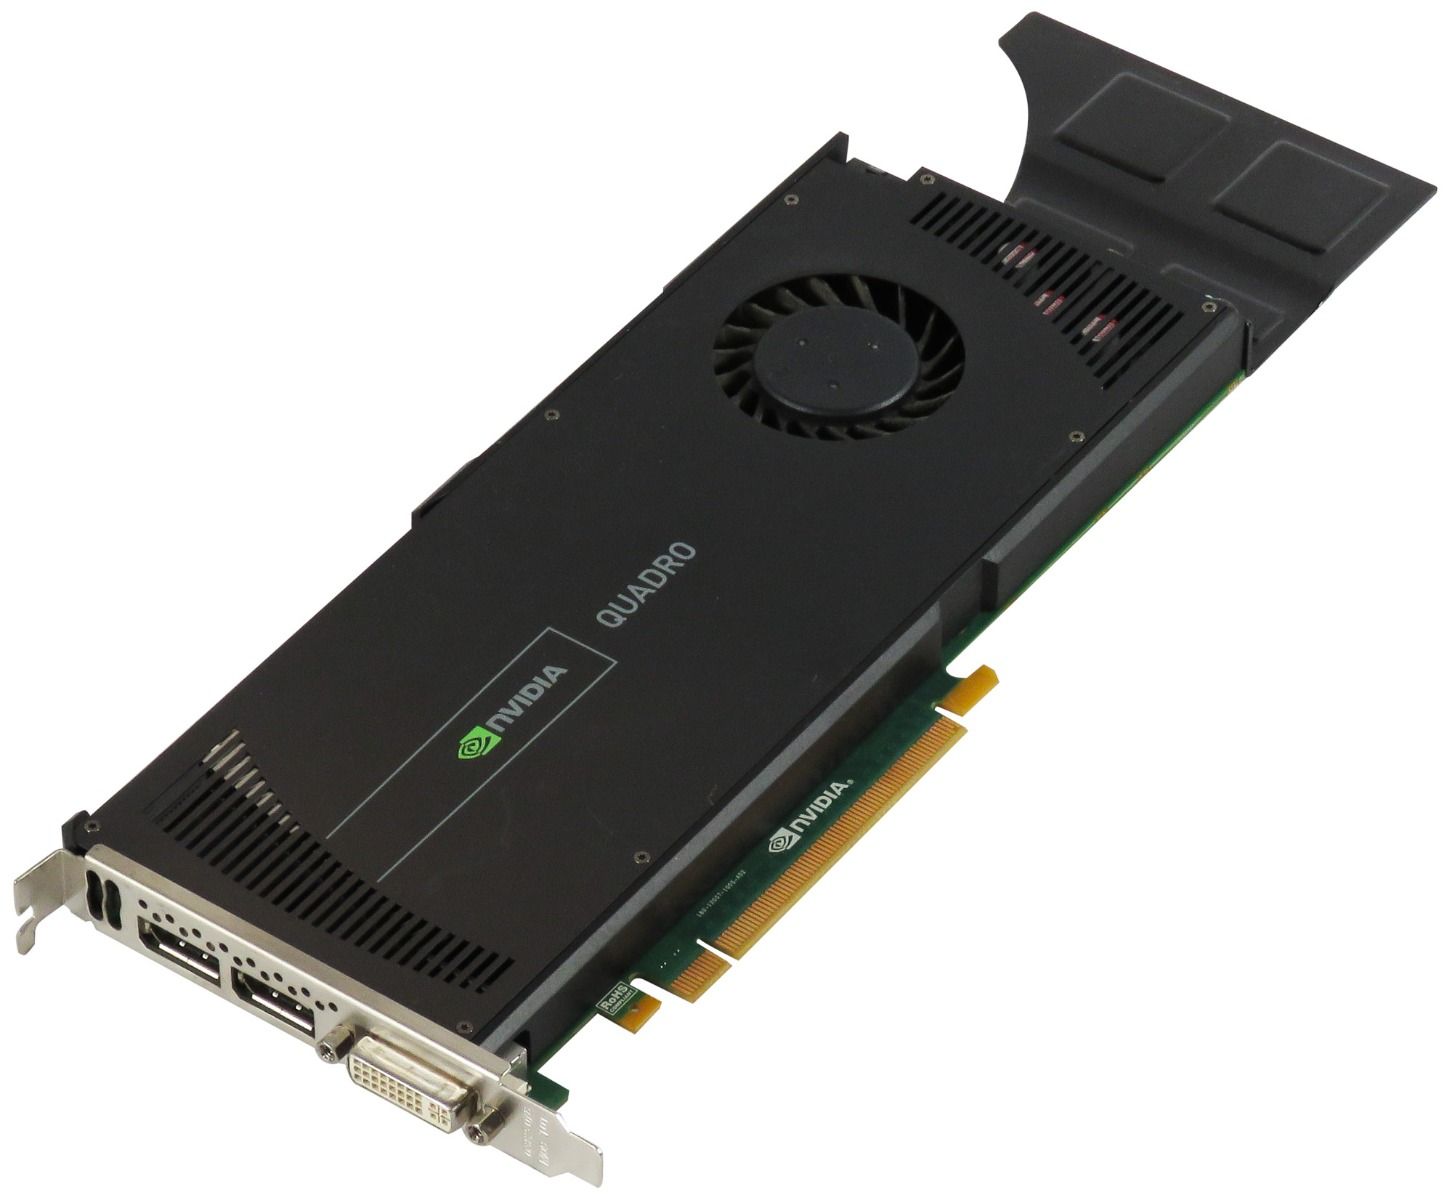 NVIDIA QUADRO 4000 2GB + SUPPORT PCIe DDR5